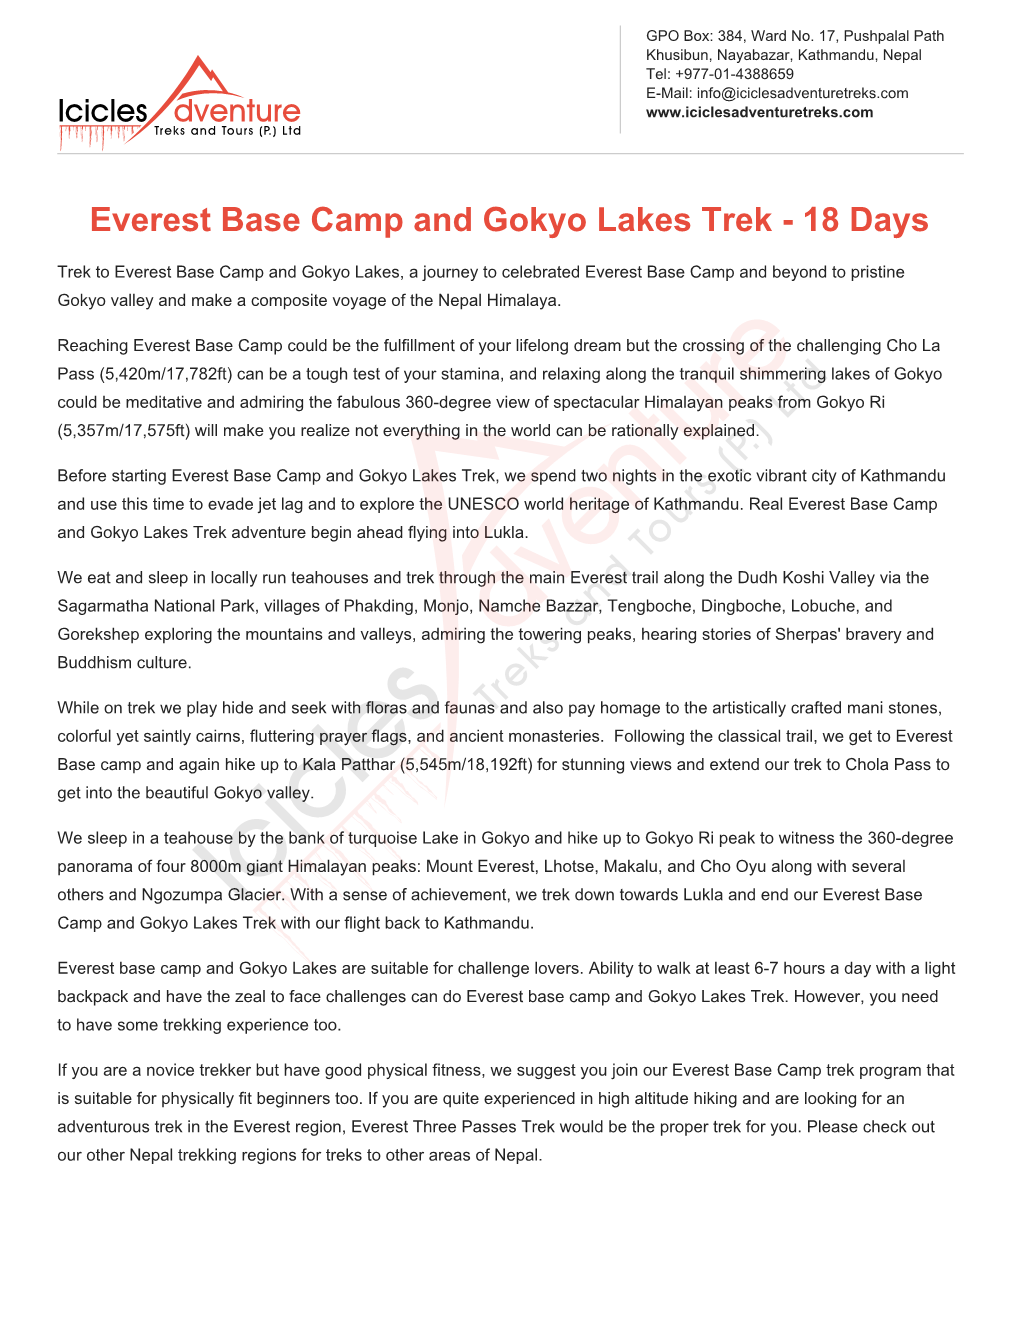 Everest Base Camp and Gokyo Lakes Trek - 18 Days